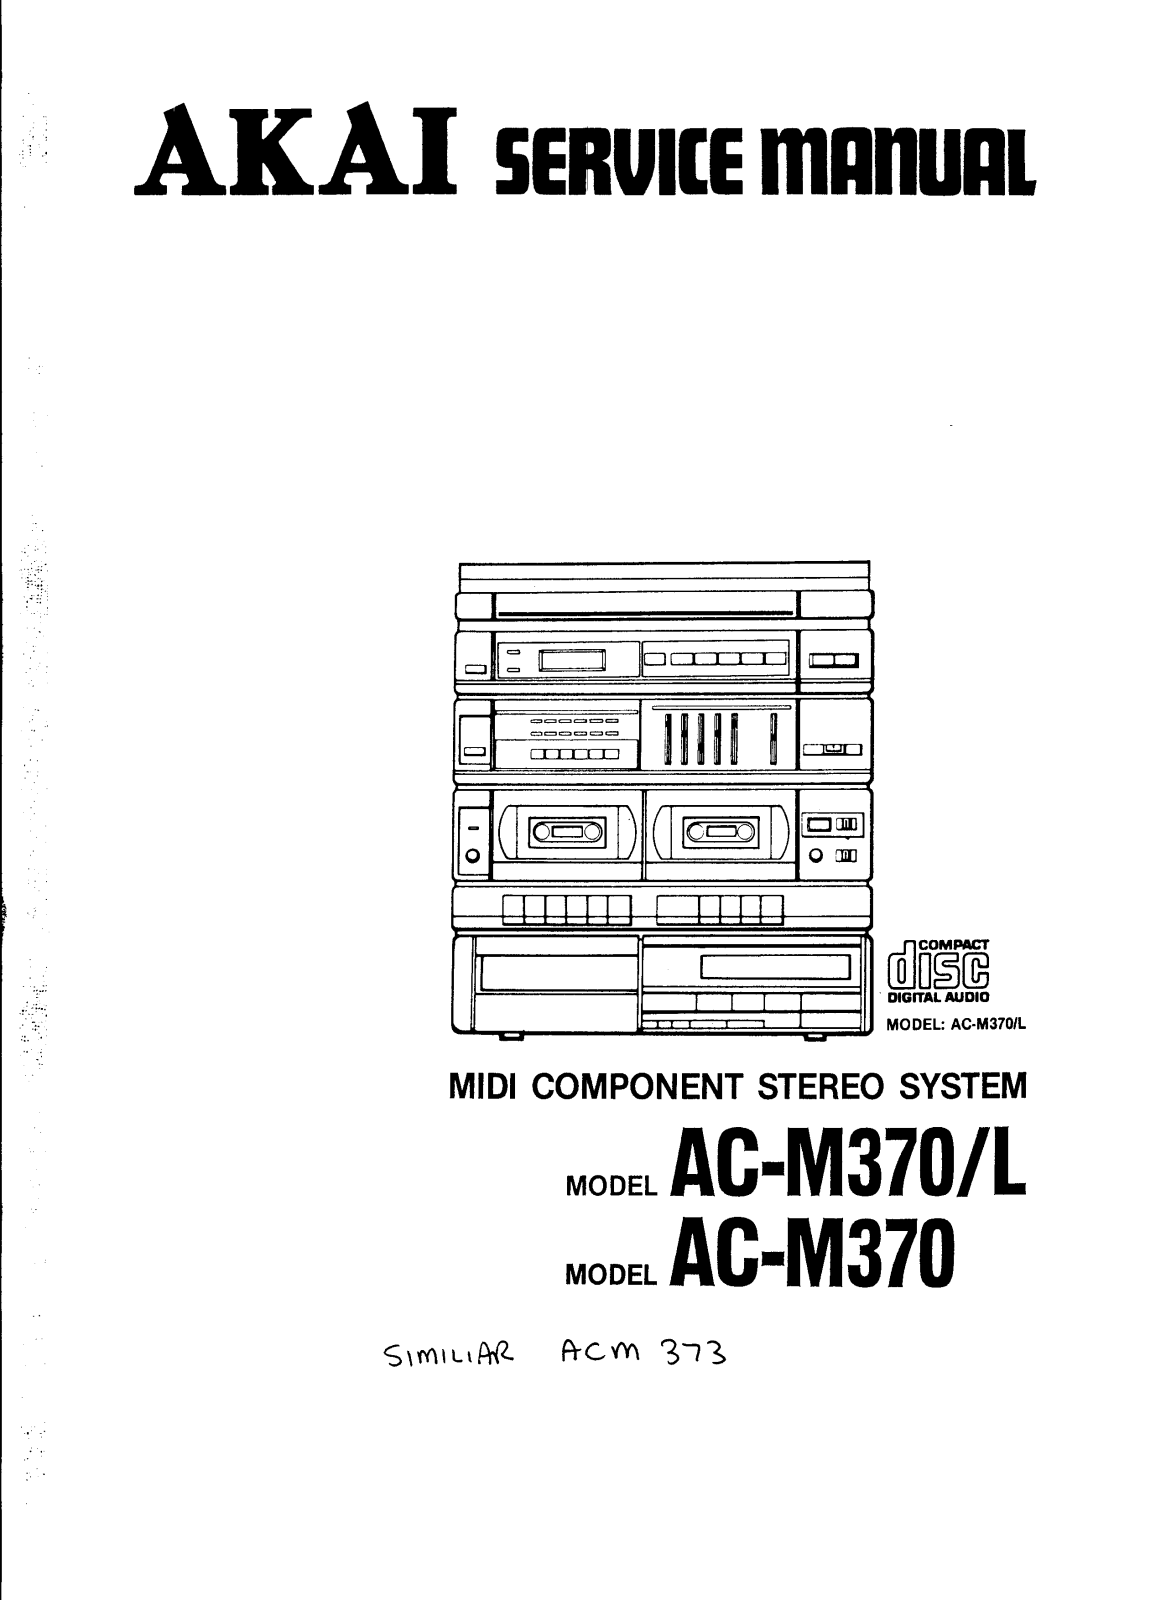 Akai ACM-370 Service manual